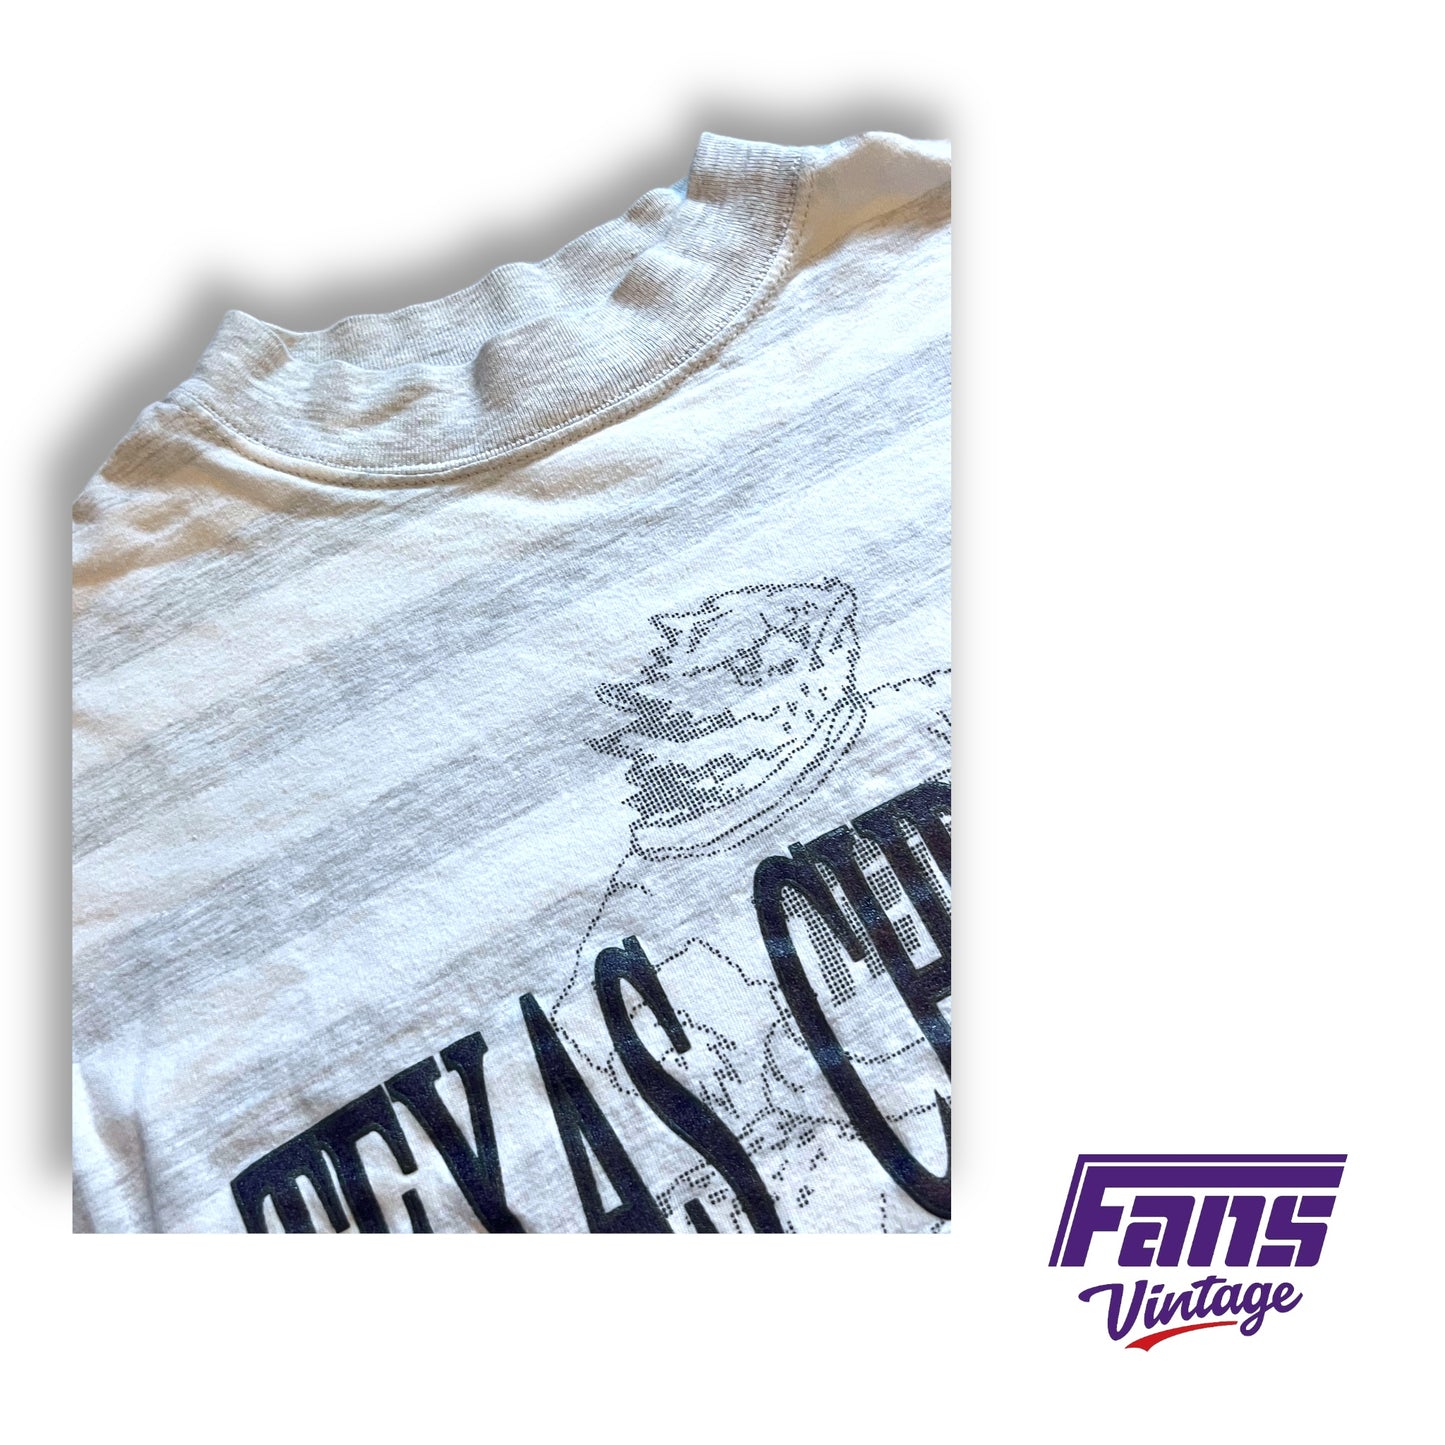 Awesome 90s Vintage TCU striped mock turtleneck long sleeve shirt - ULTRA SOFT!